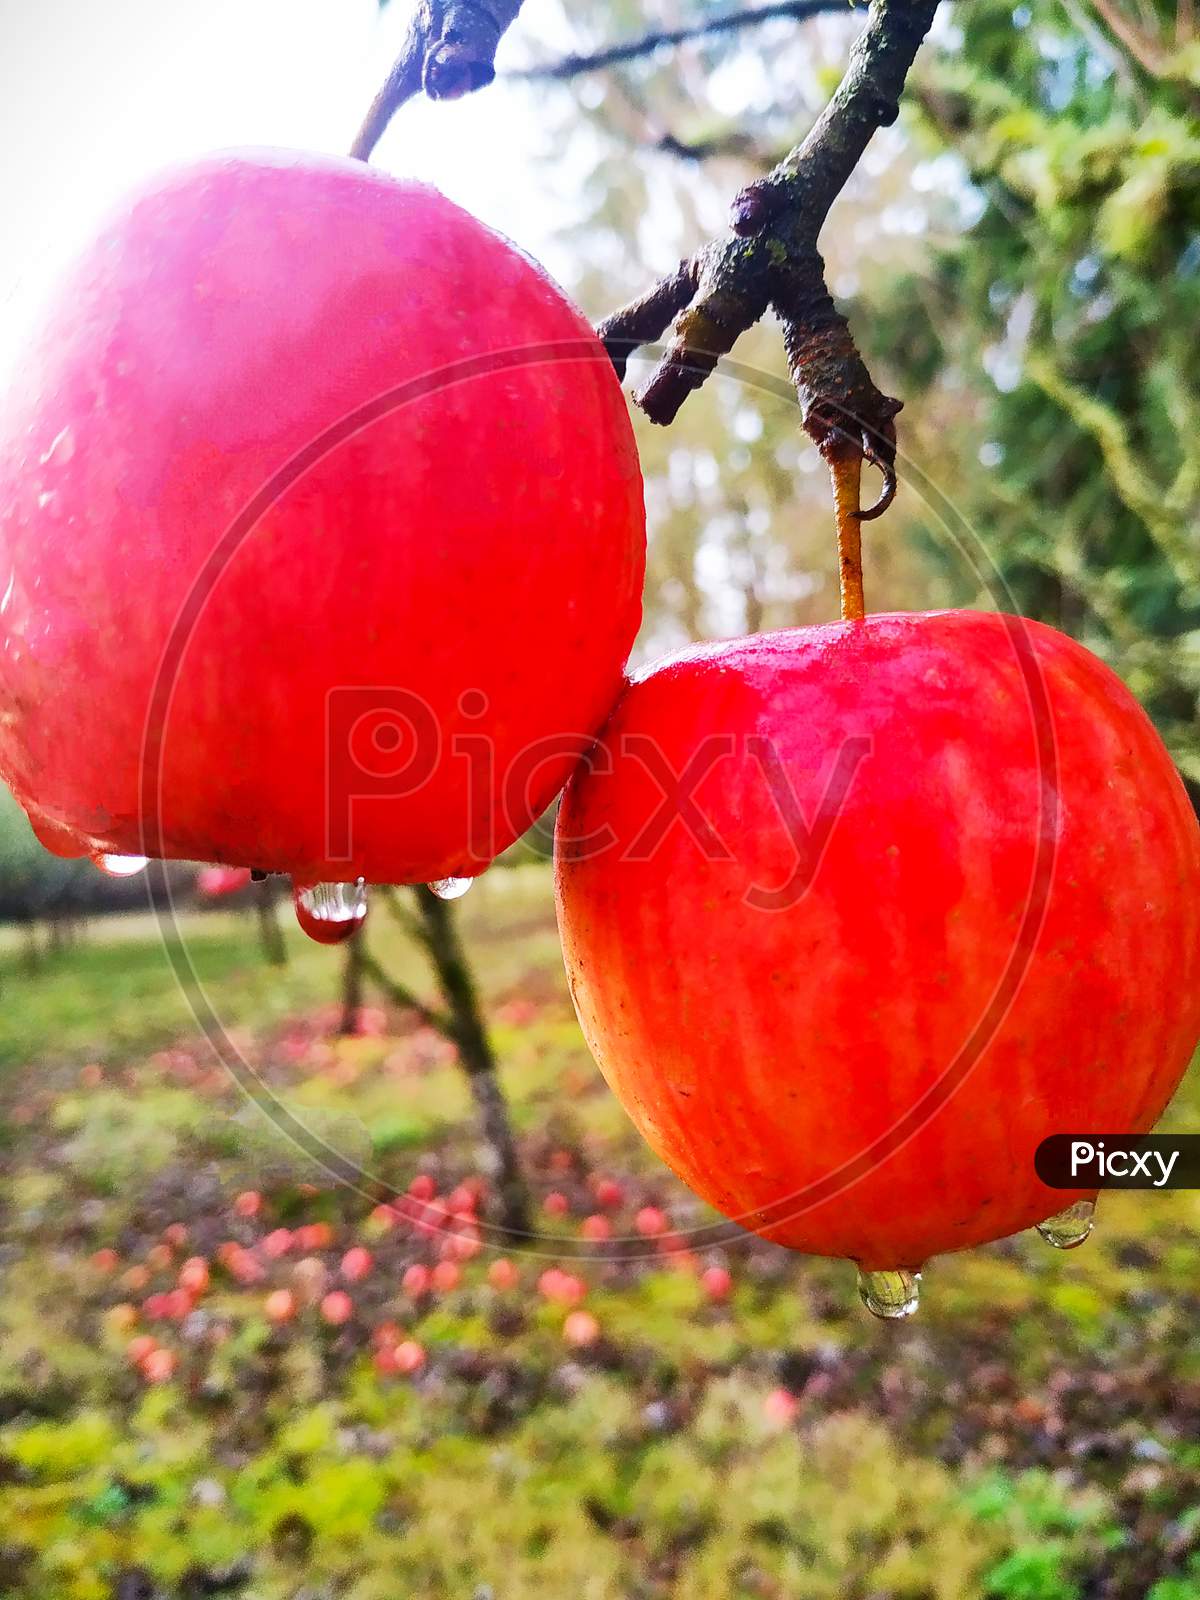 Fresh Apples Growing on Trees in a Apple Garden